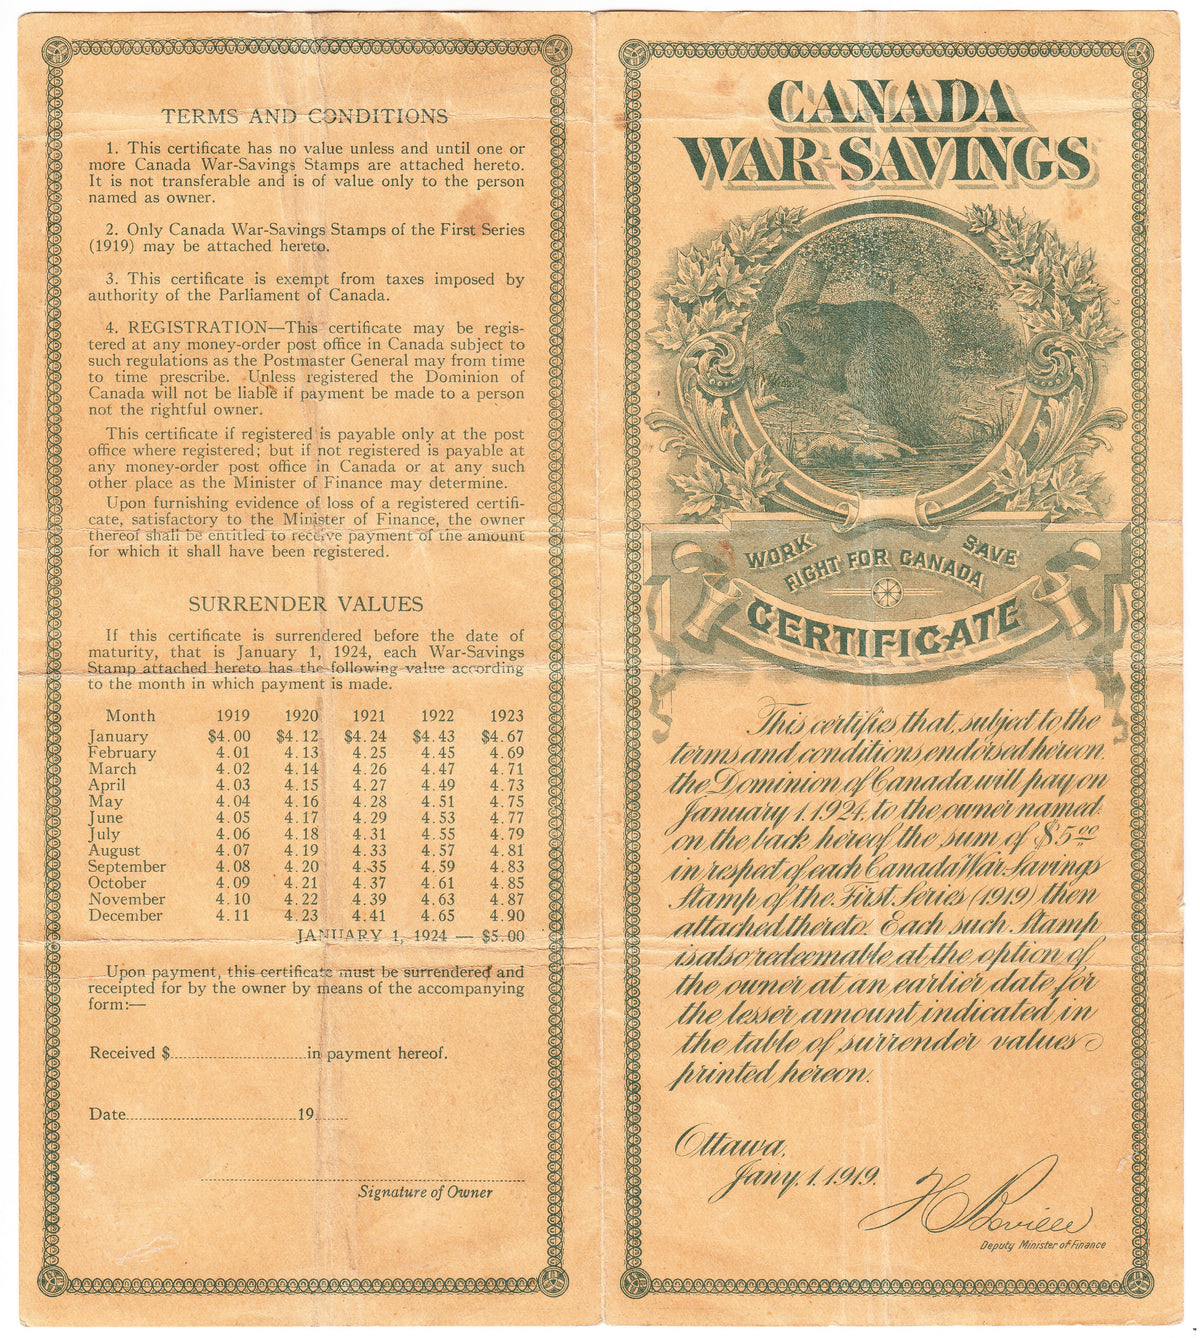 0002FD1708 - FWS2 - Used on War Savings Certificate